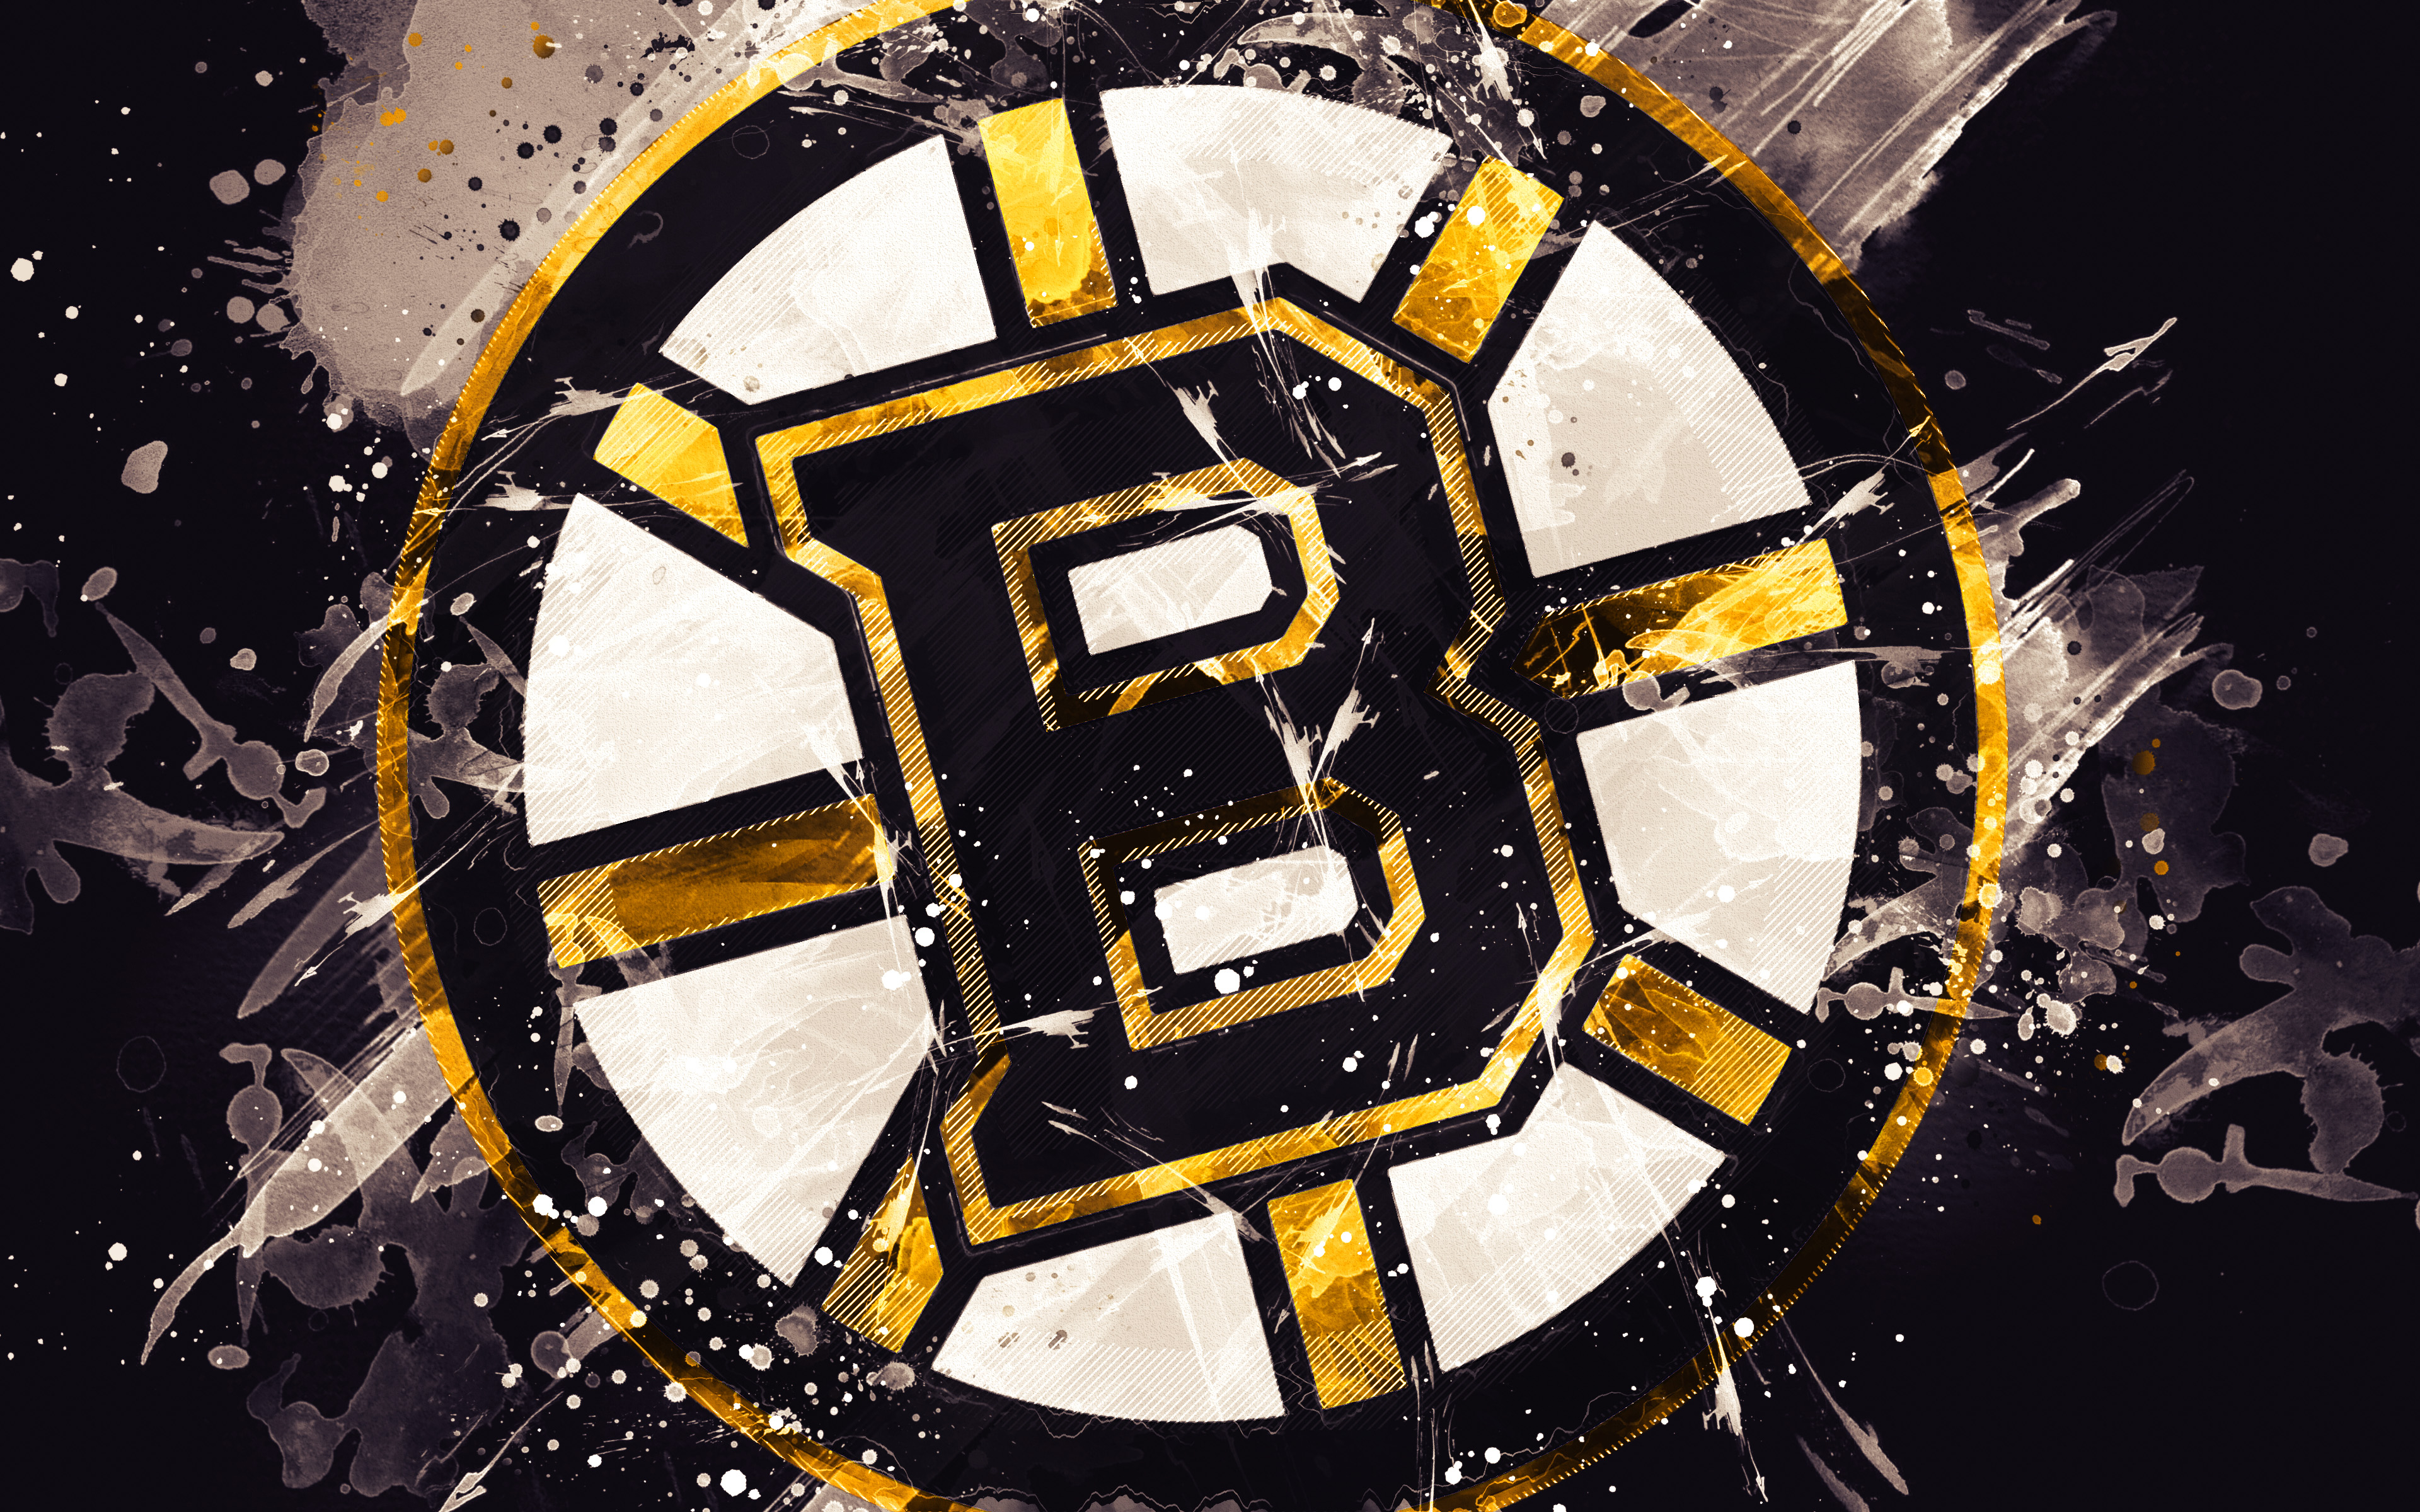 Boston Bruins Wallpapers